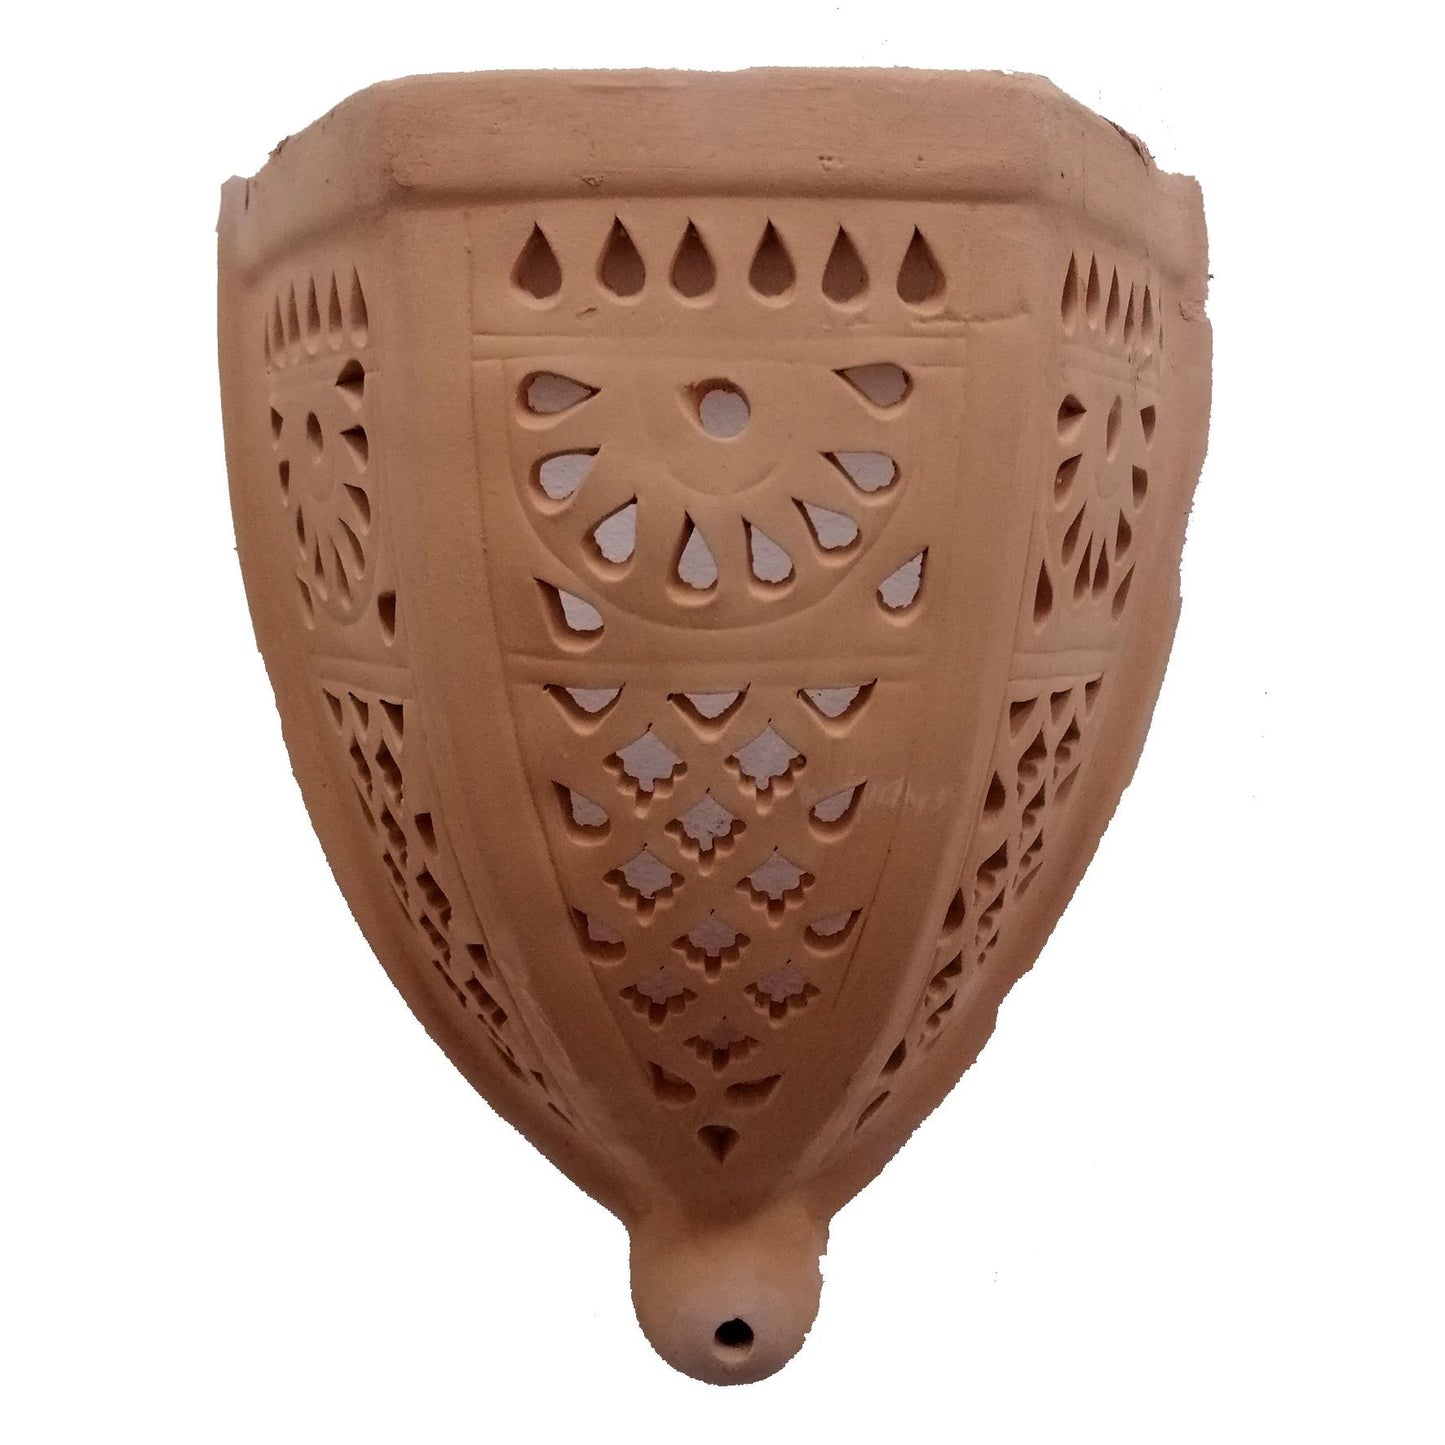 Arredo Etnico Applique Parete Lampada Terracotta Tunisina Marocchina 0211201009